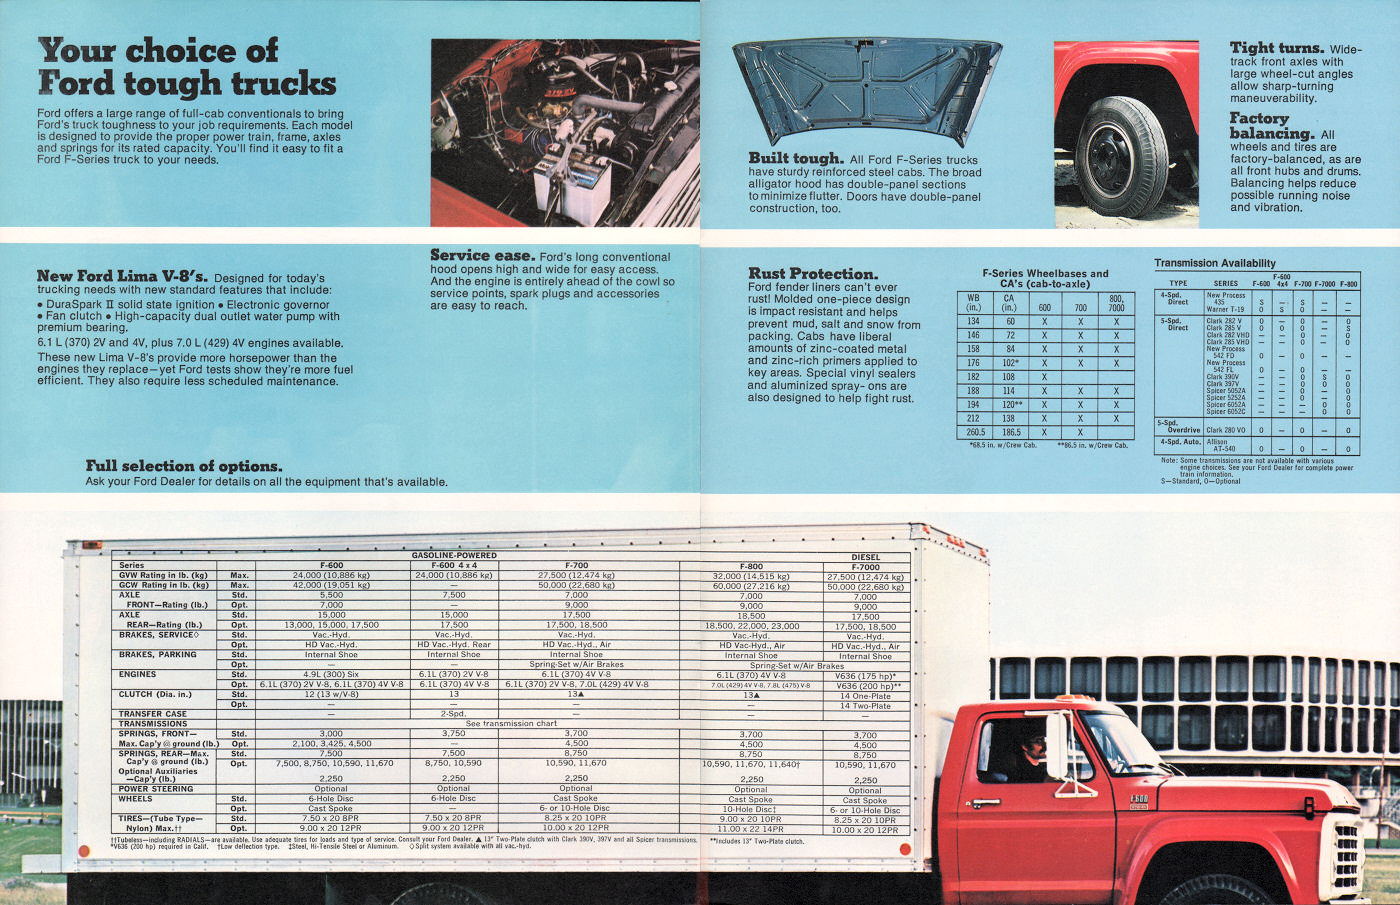 n_1979 Ford F-Series Trucks-06-07.jpg